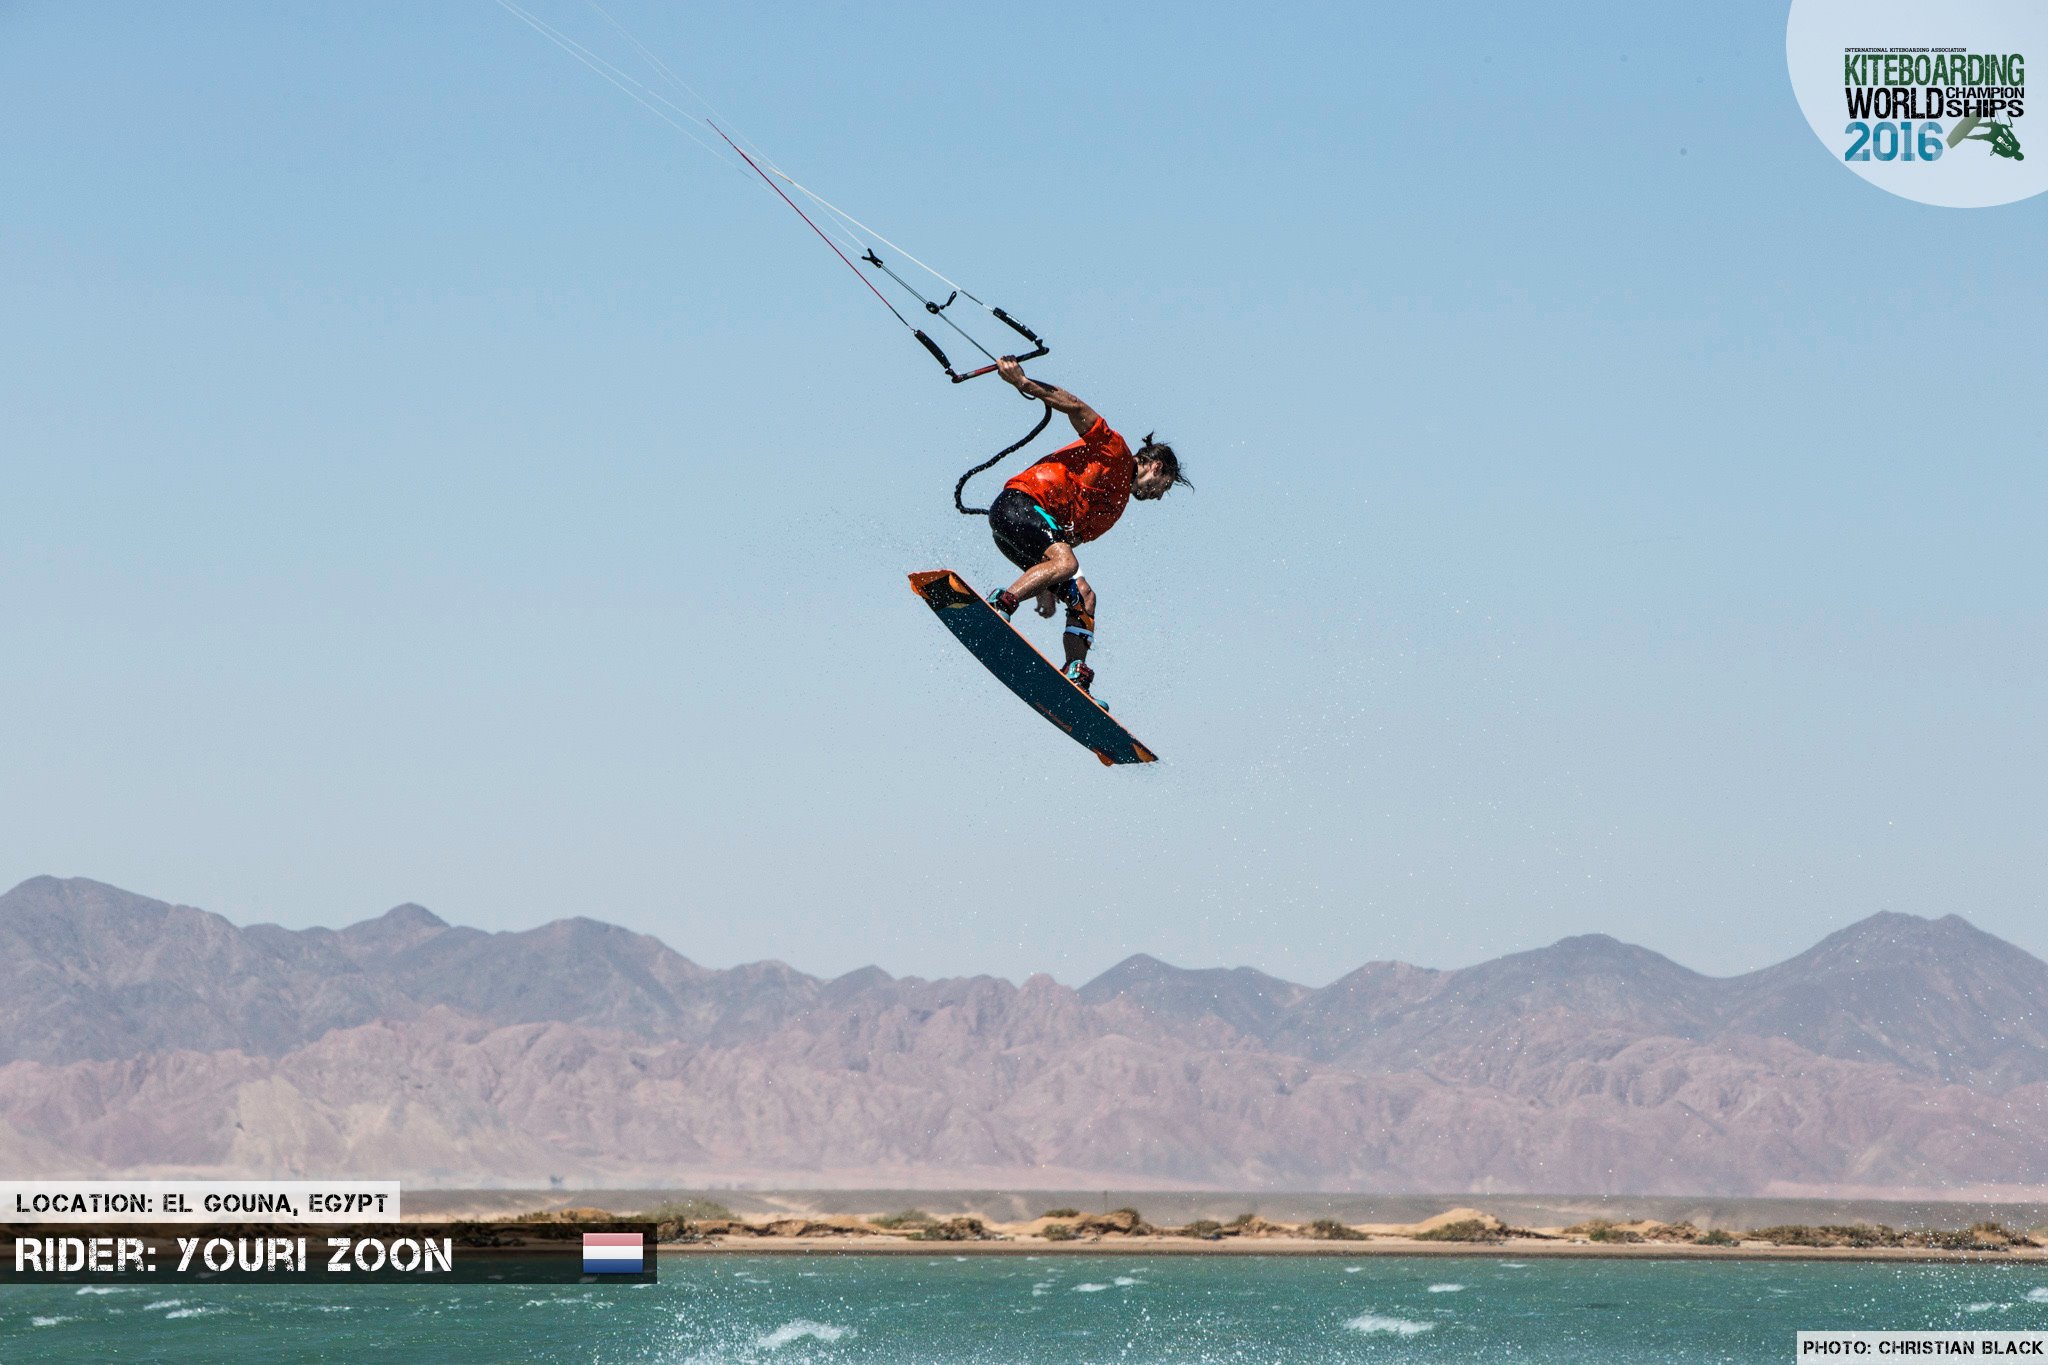  Kite Boarding  World Championship 2016, Round 1  El Gouna EGY  Final results